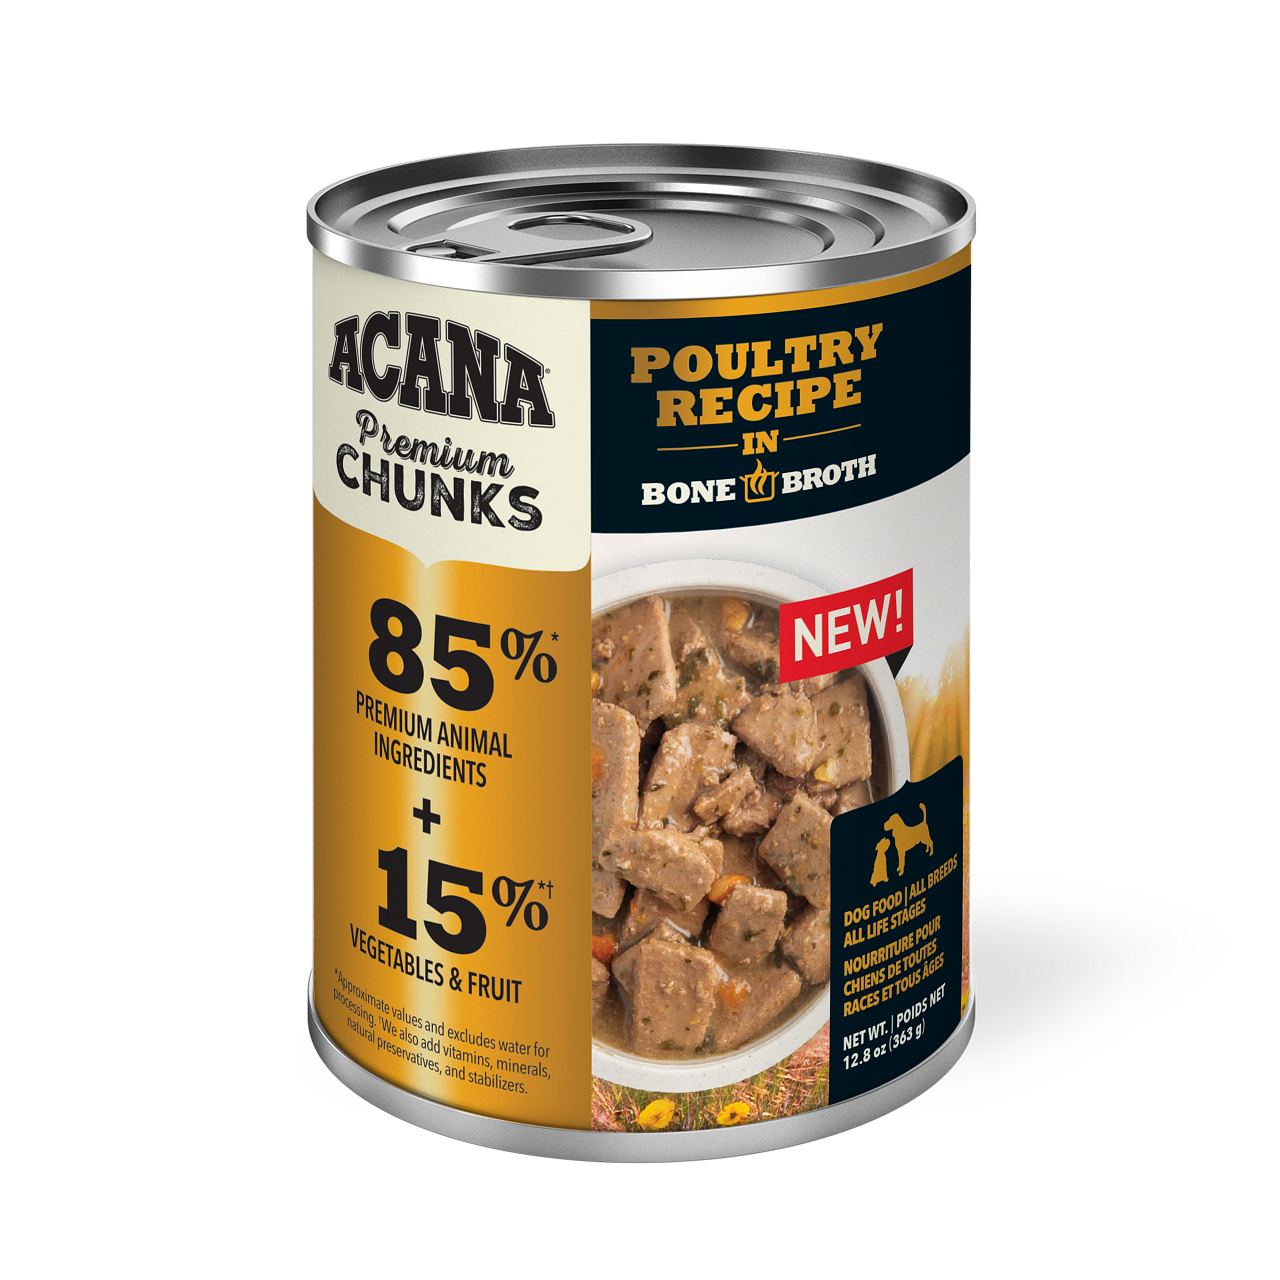 Acana Premium Chunks, Poultry Recipe in Bone Broth Wet Dog Food, 12.8-oz, Case of 12